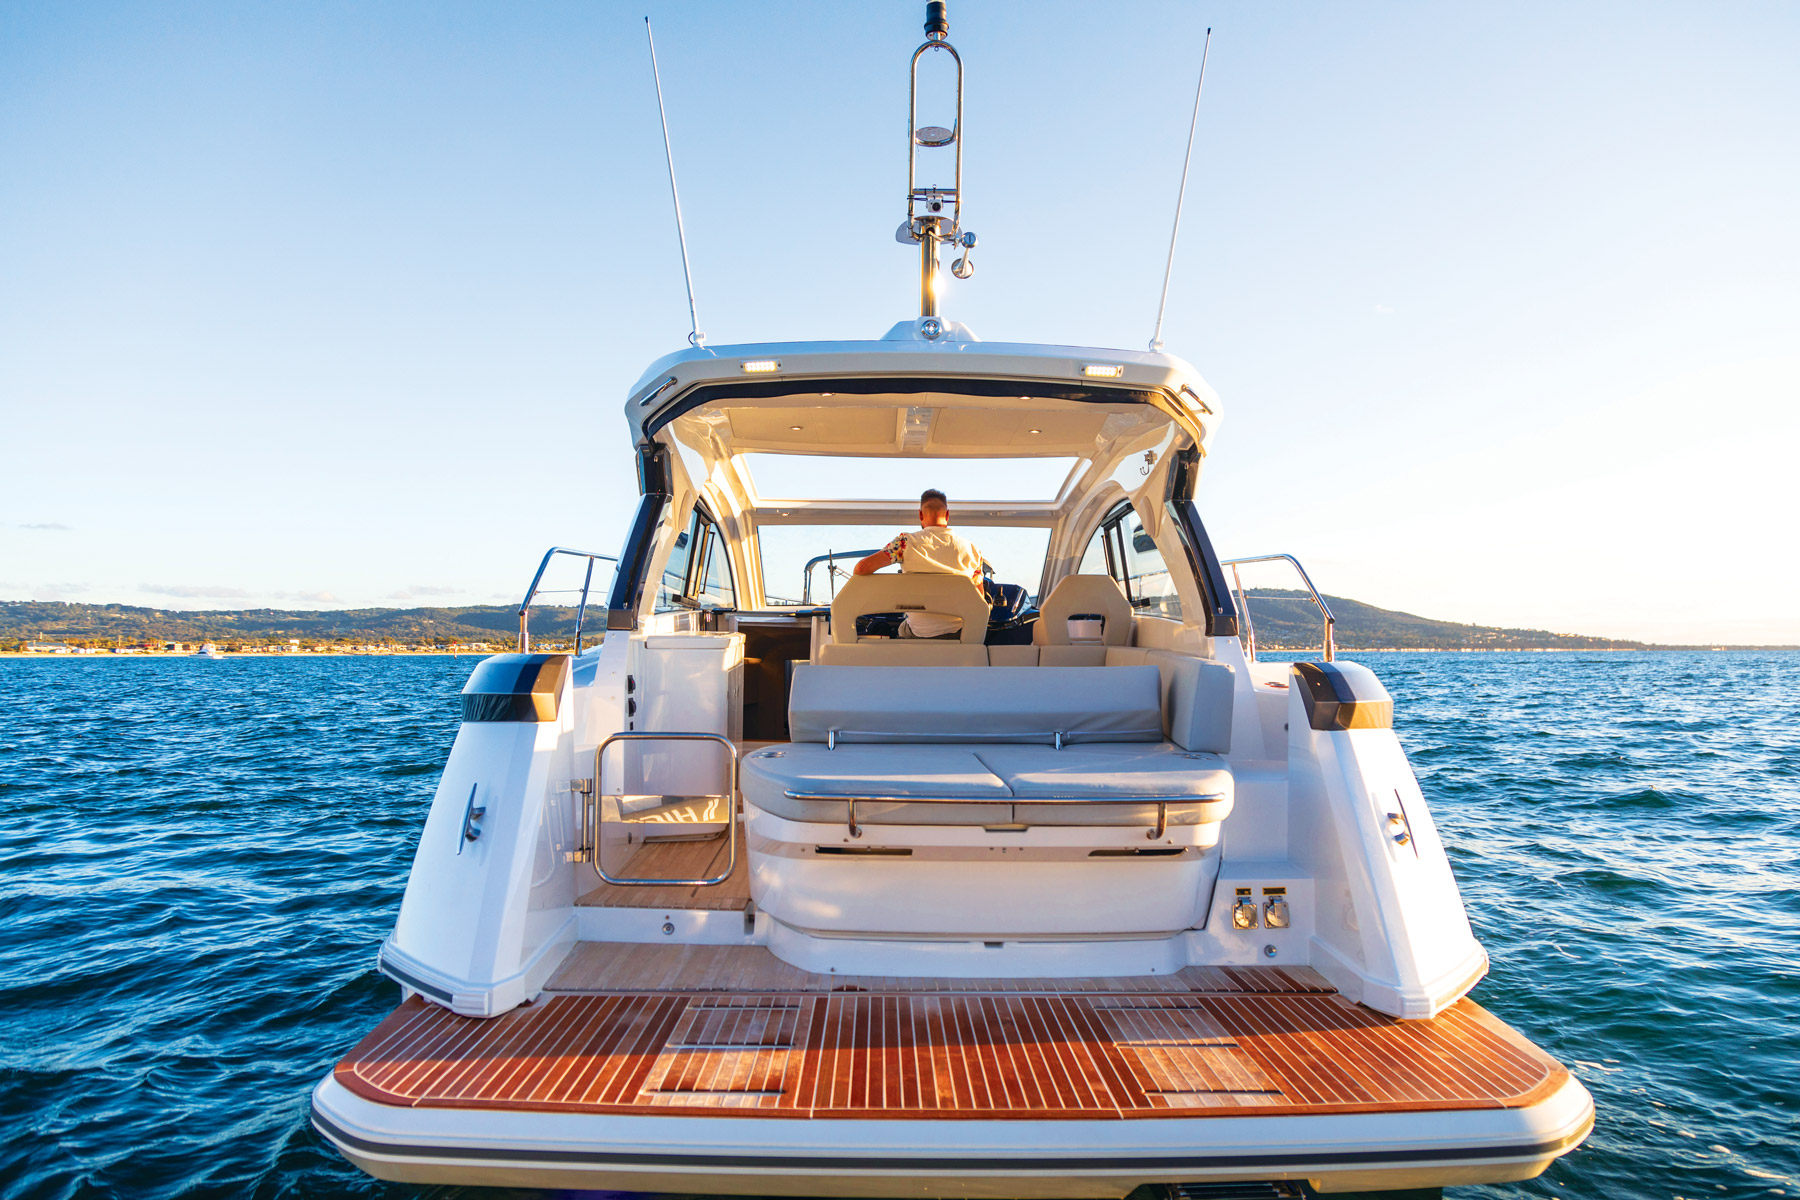 GT rear view | Beneteau  boat review